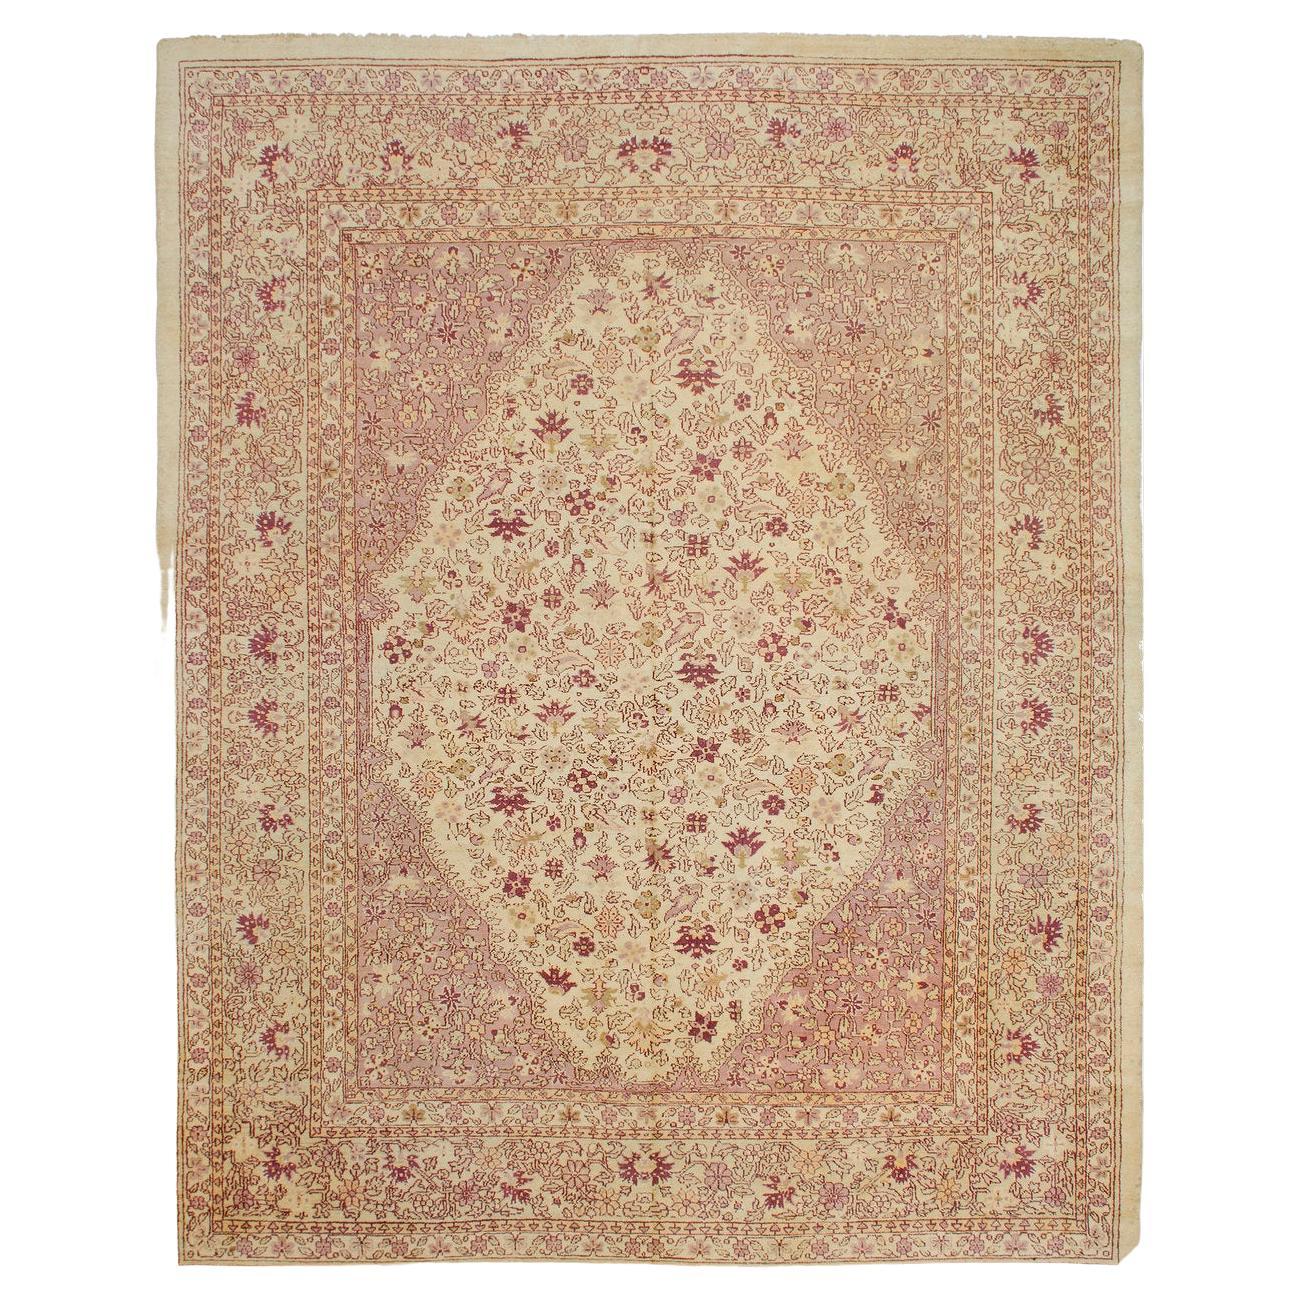 Antique Indian Amritsar Carpet For Sale